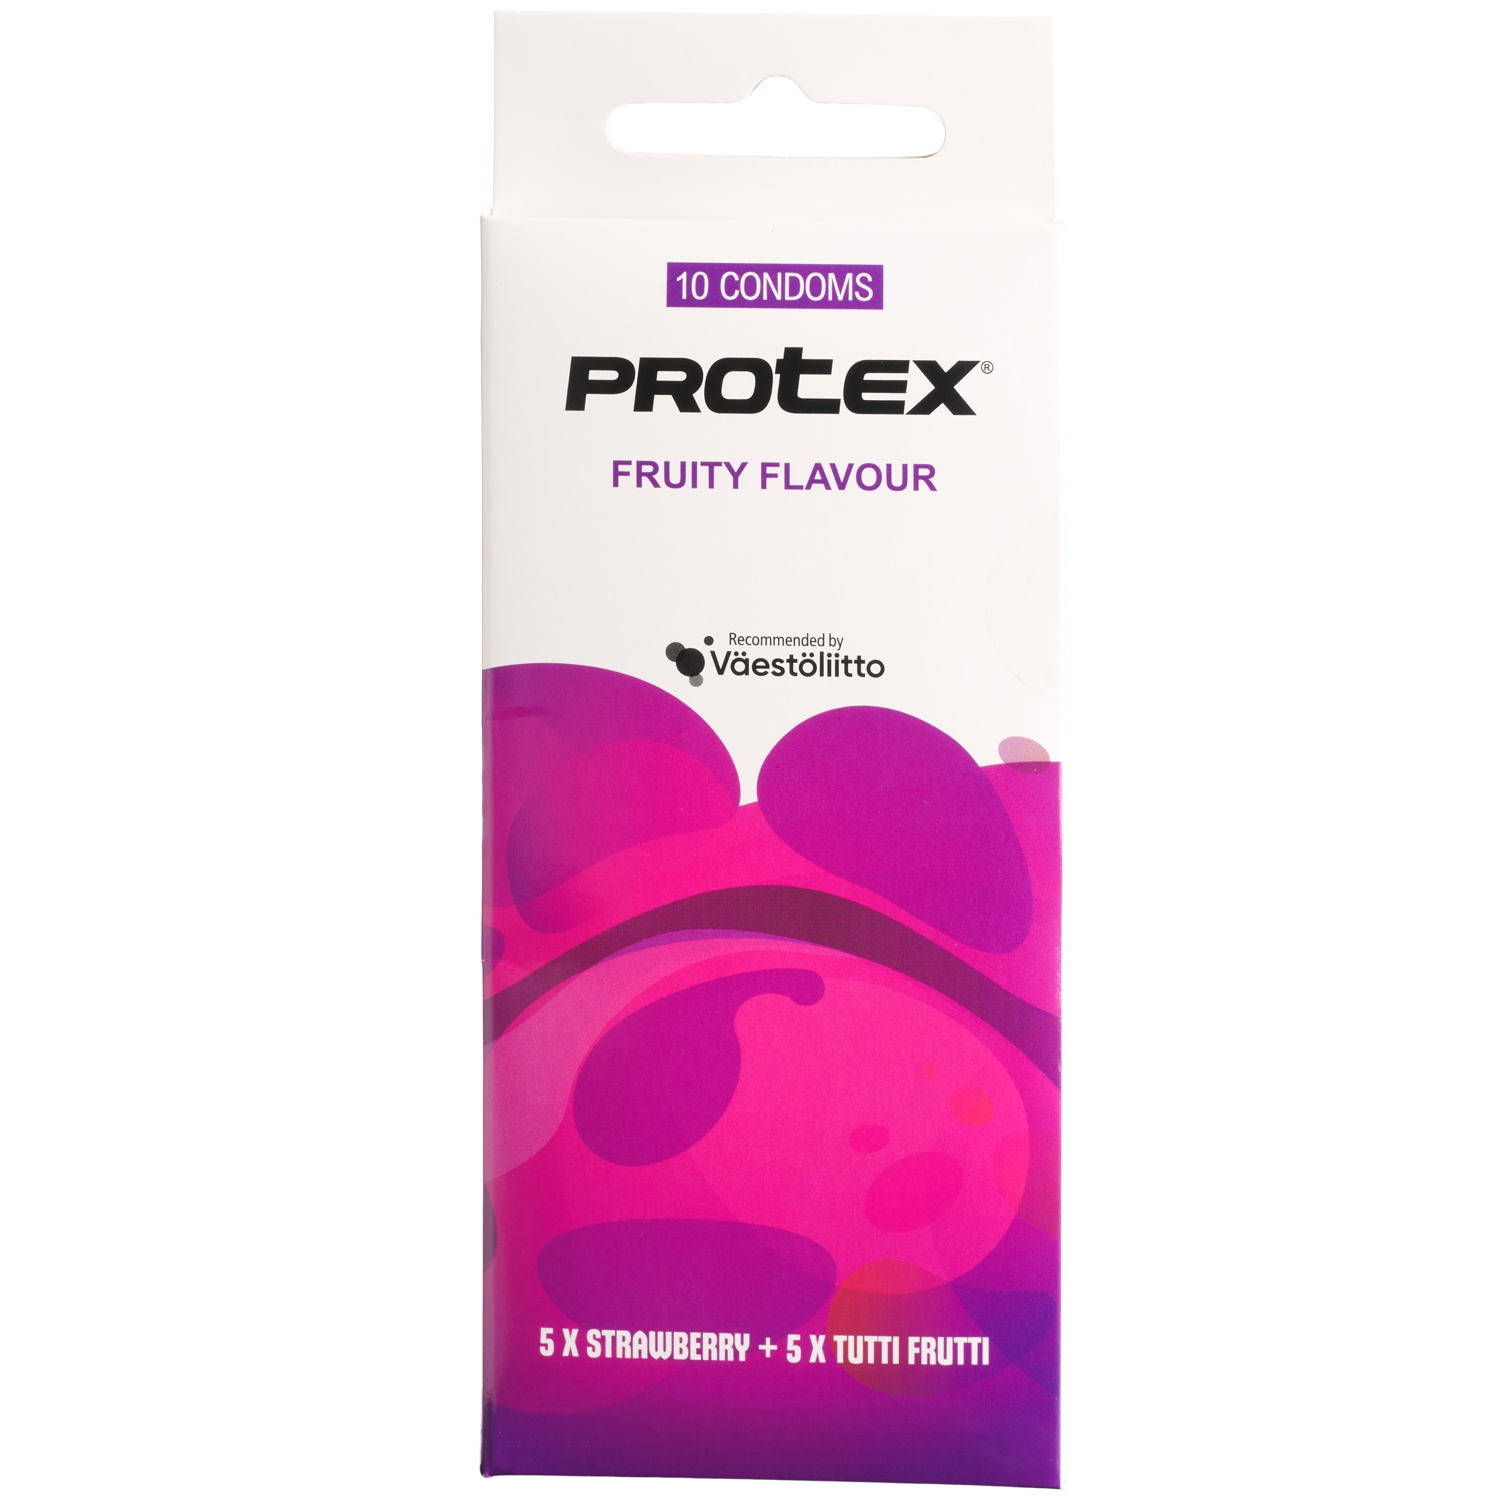 Protex Fruity Flavour Strawberry & Tutti Frutti Kondomer 10 stk thumbnail